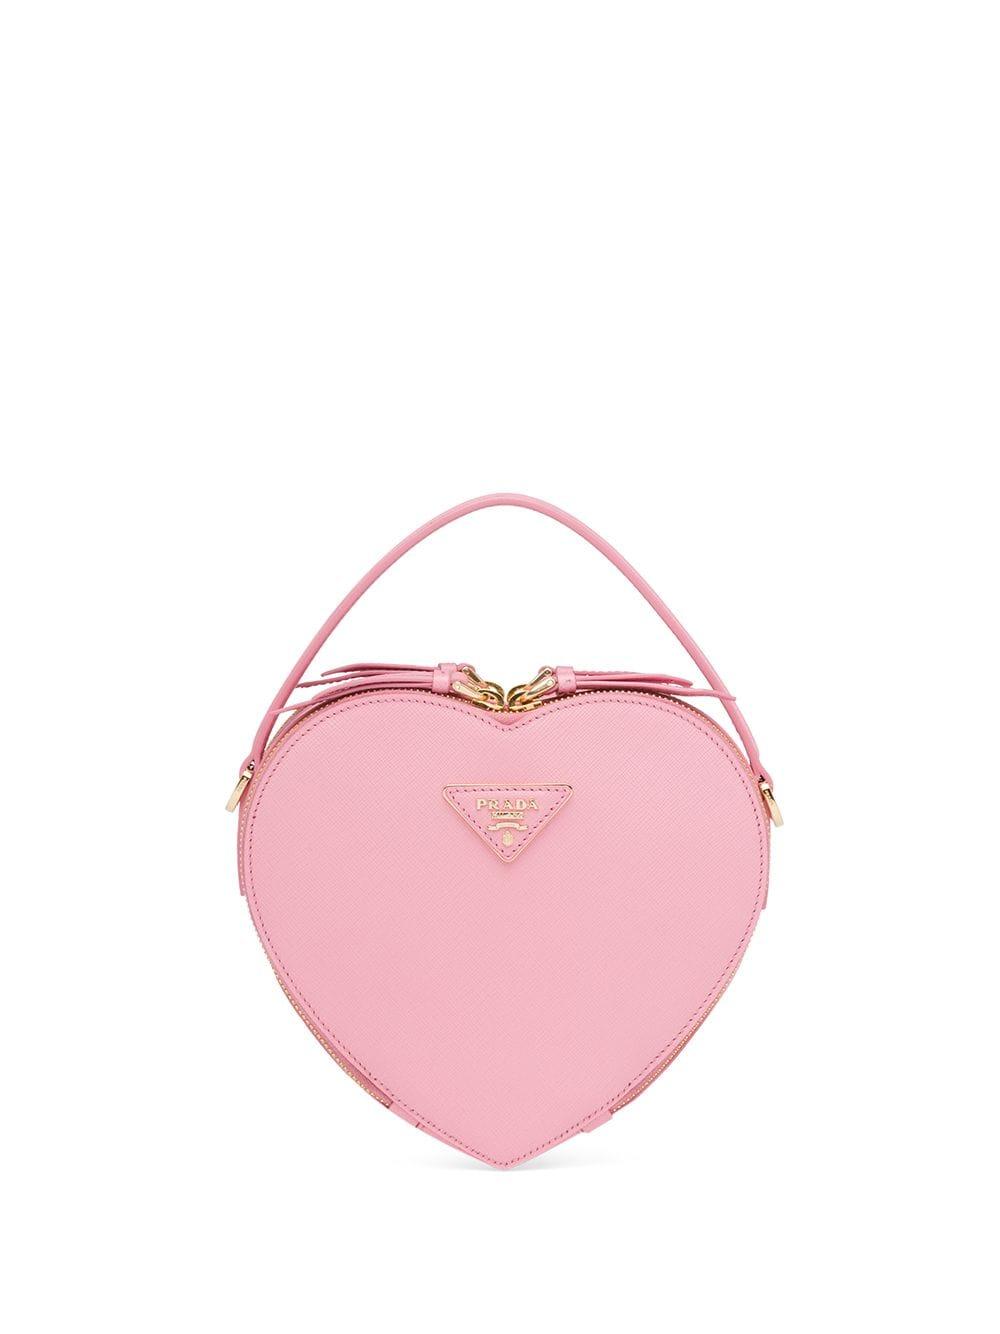 Arriba 65+ imagen pink heart bag prada - Abzlocal.mx